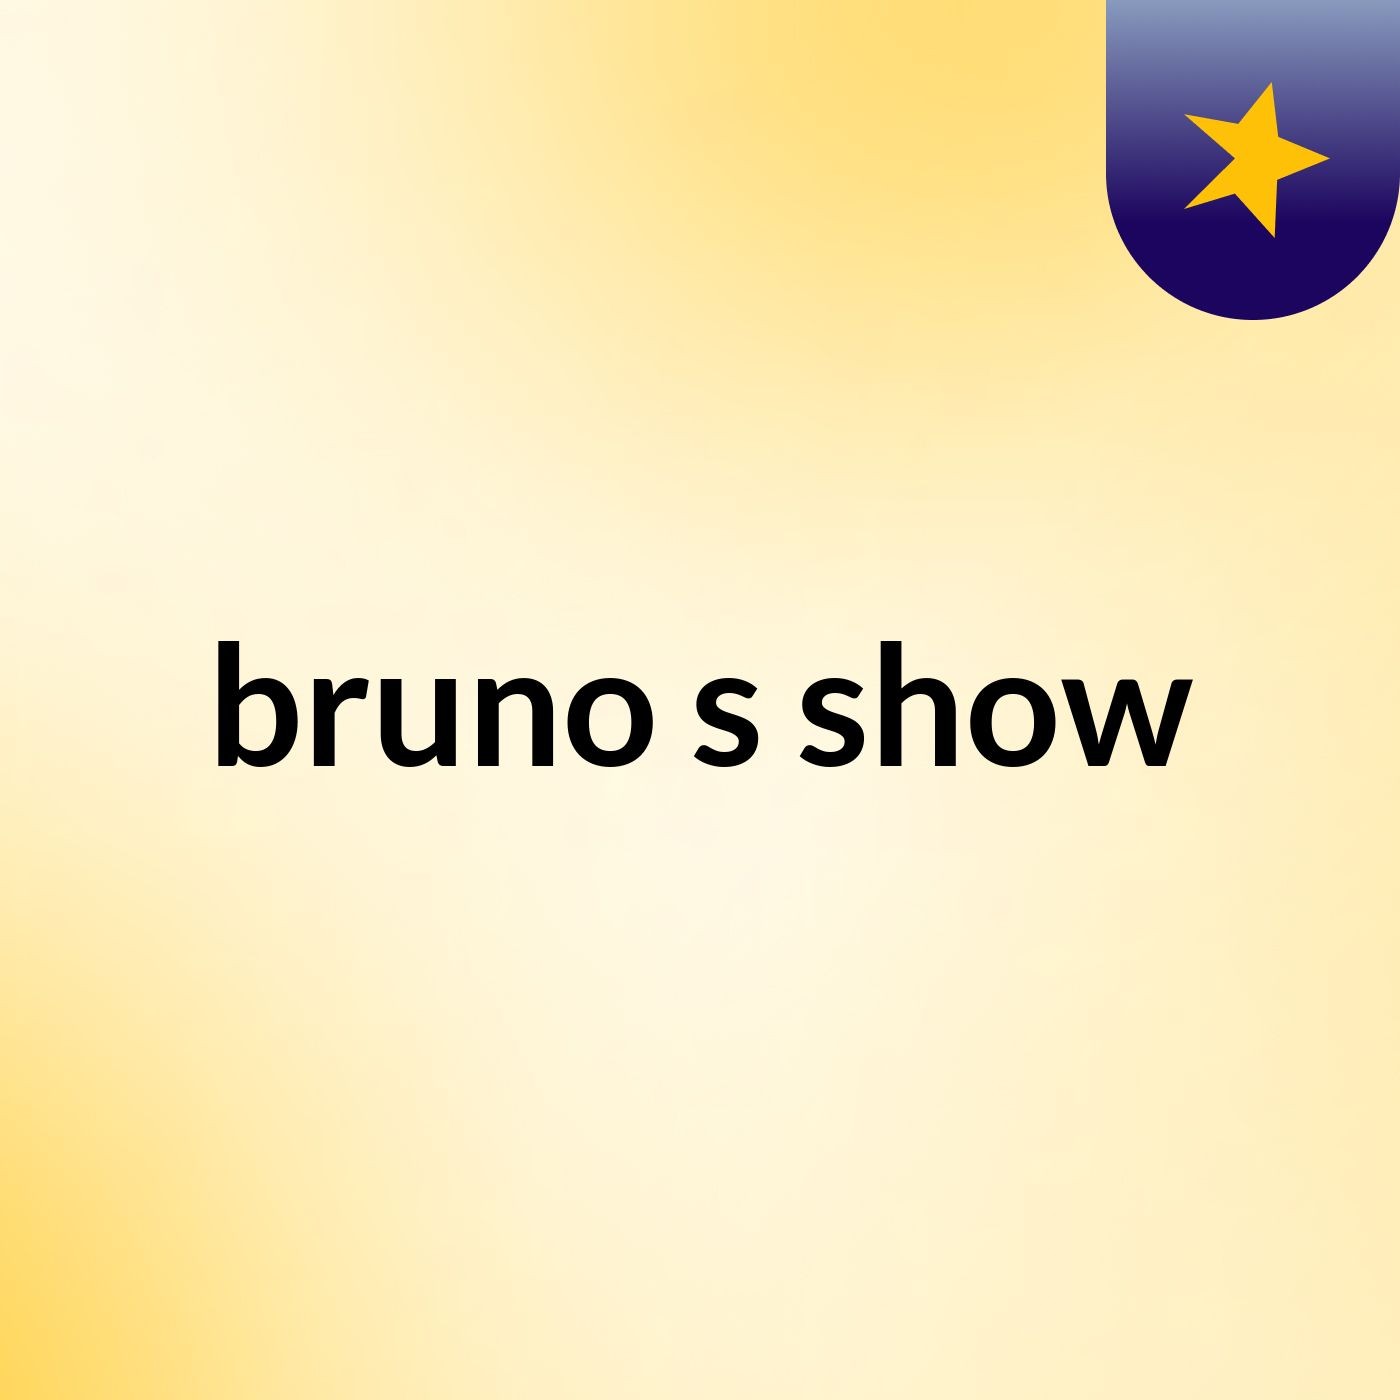 bruno's show